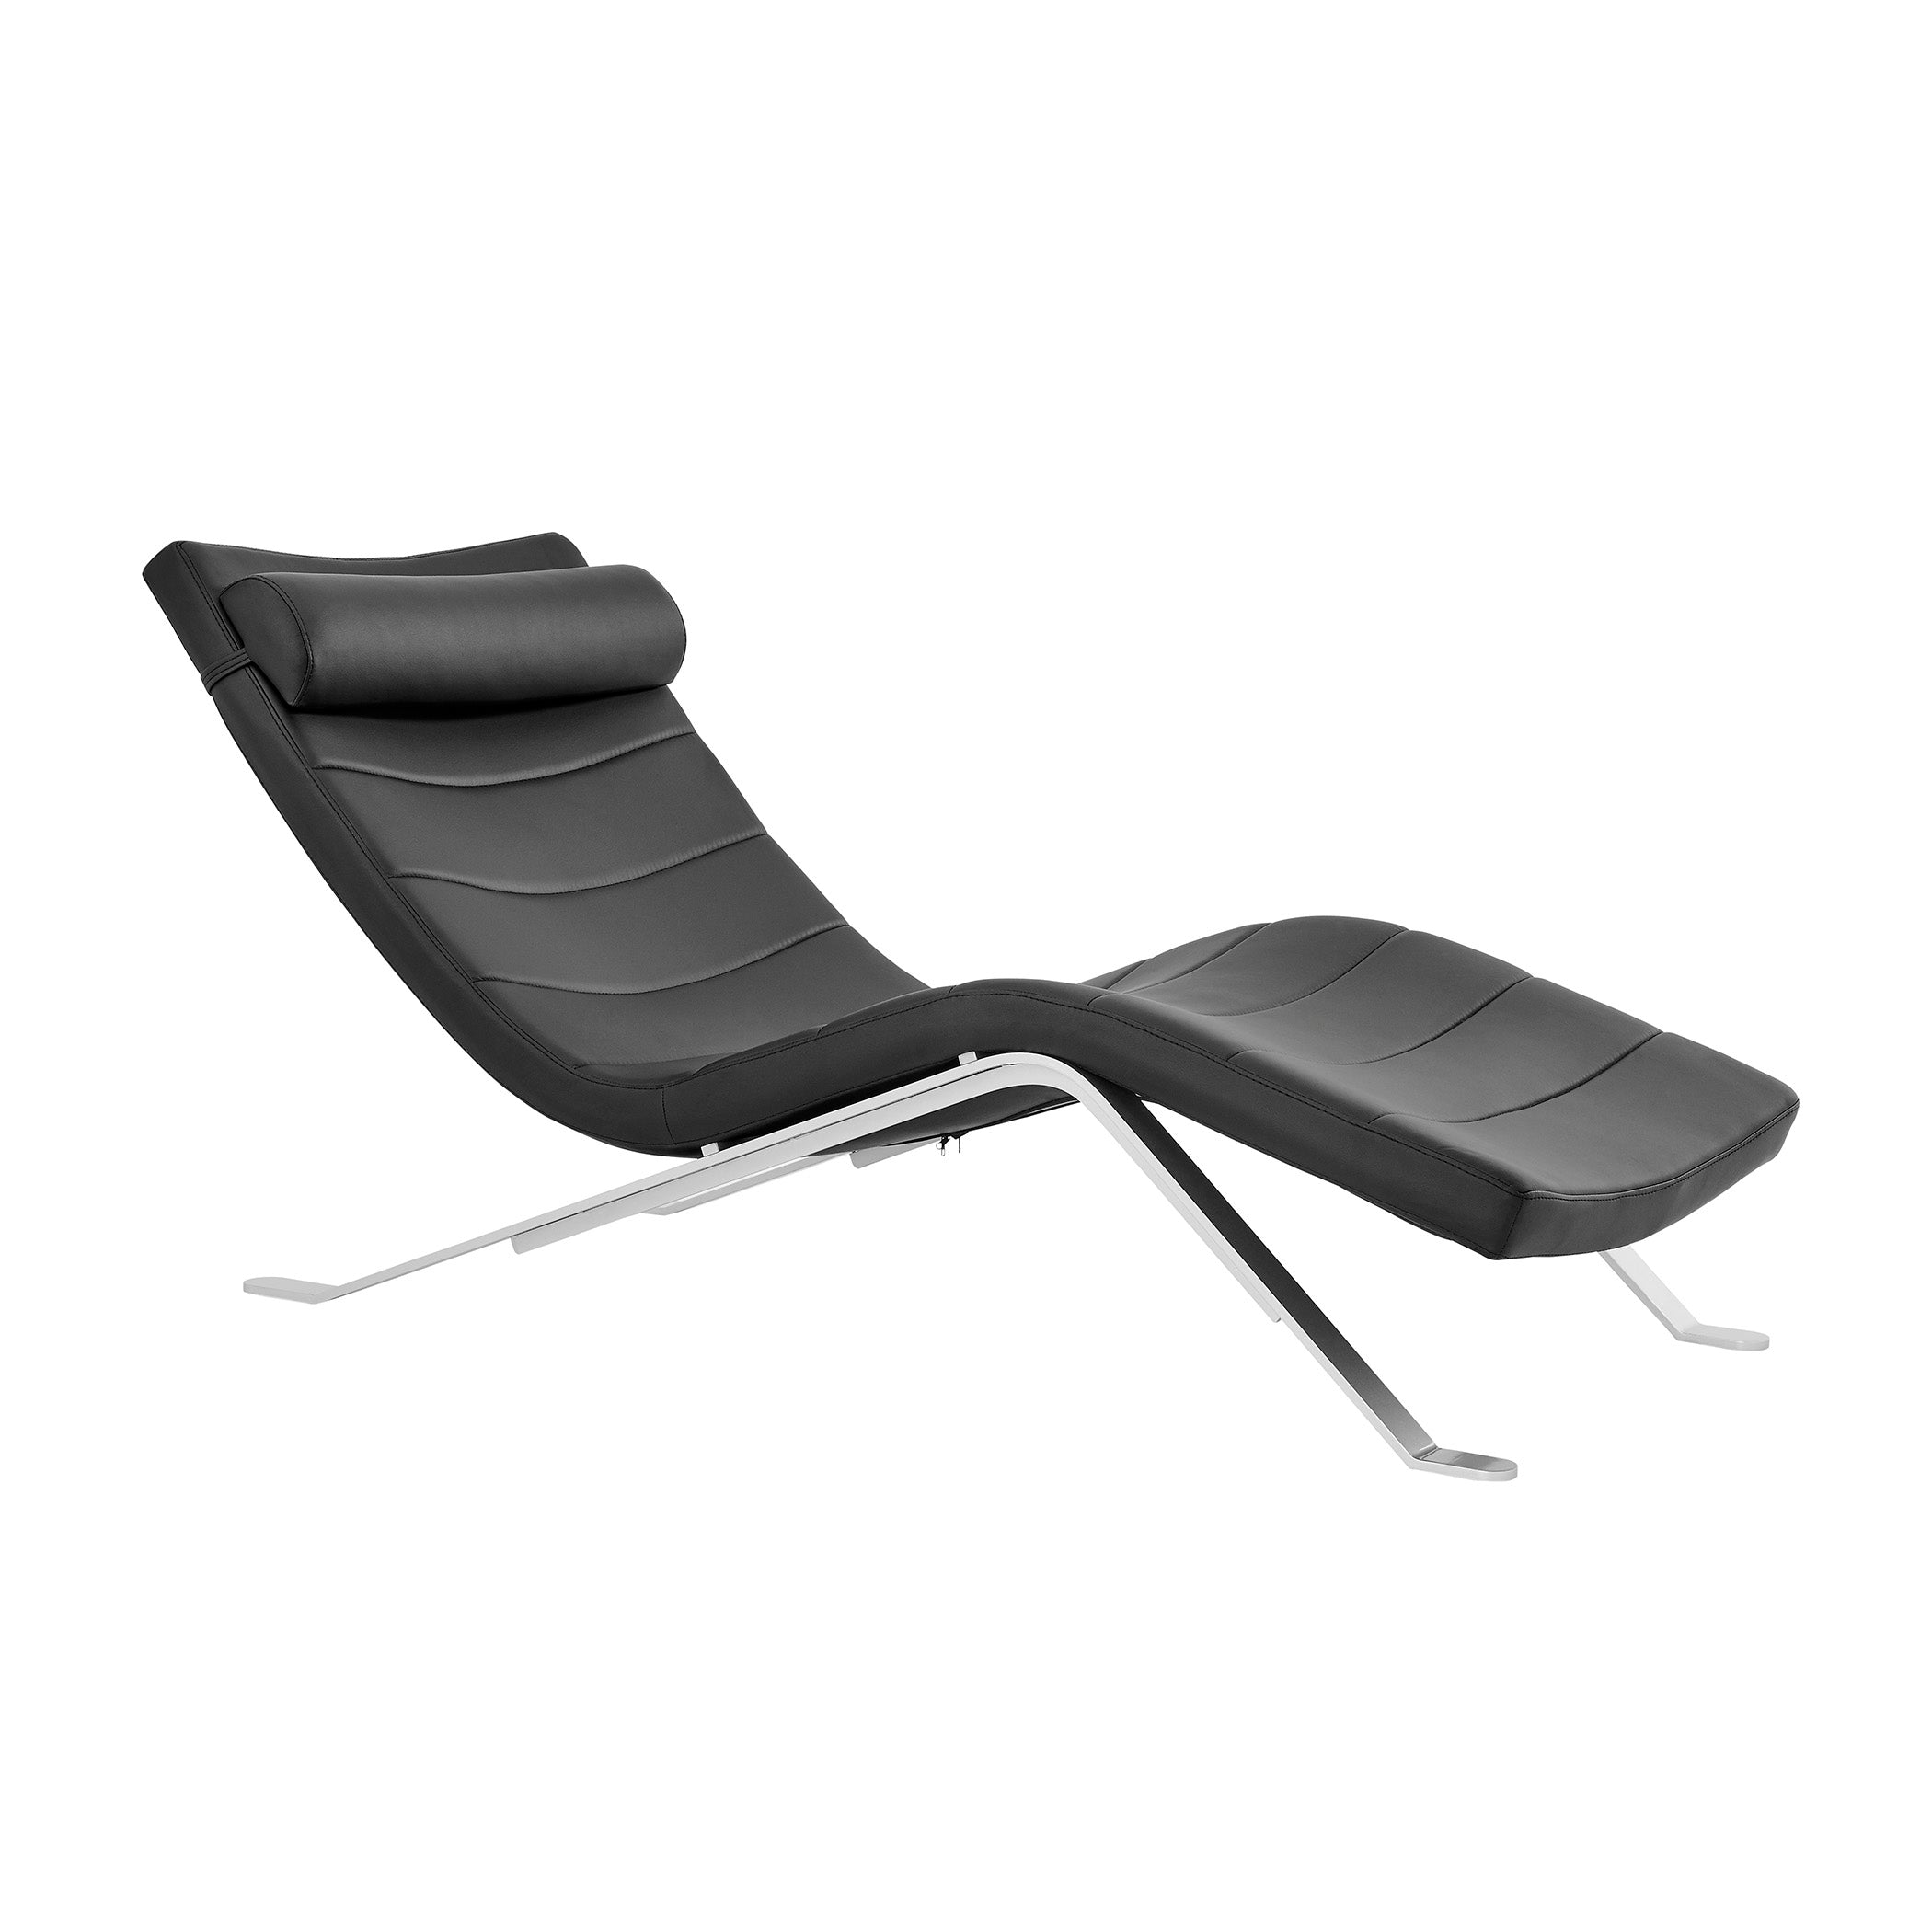 Gilda Lounge Chair - What A Room